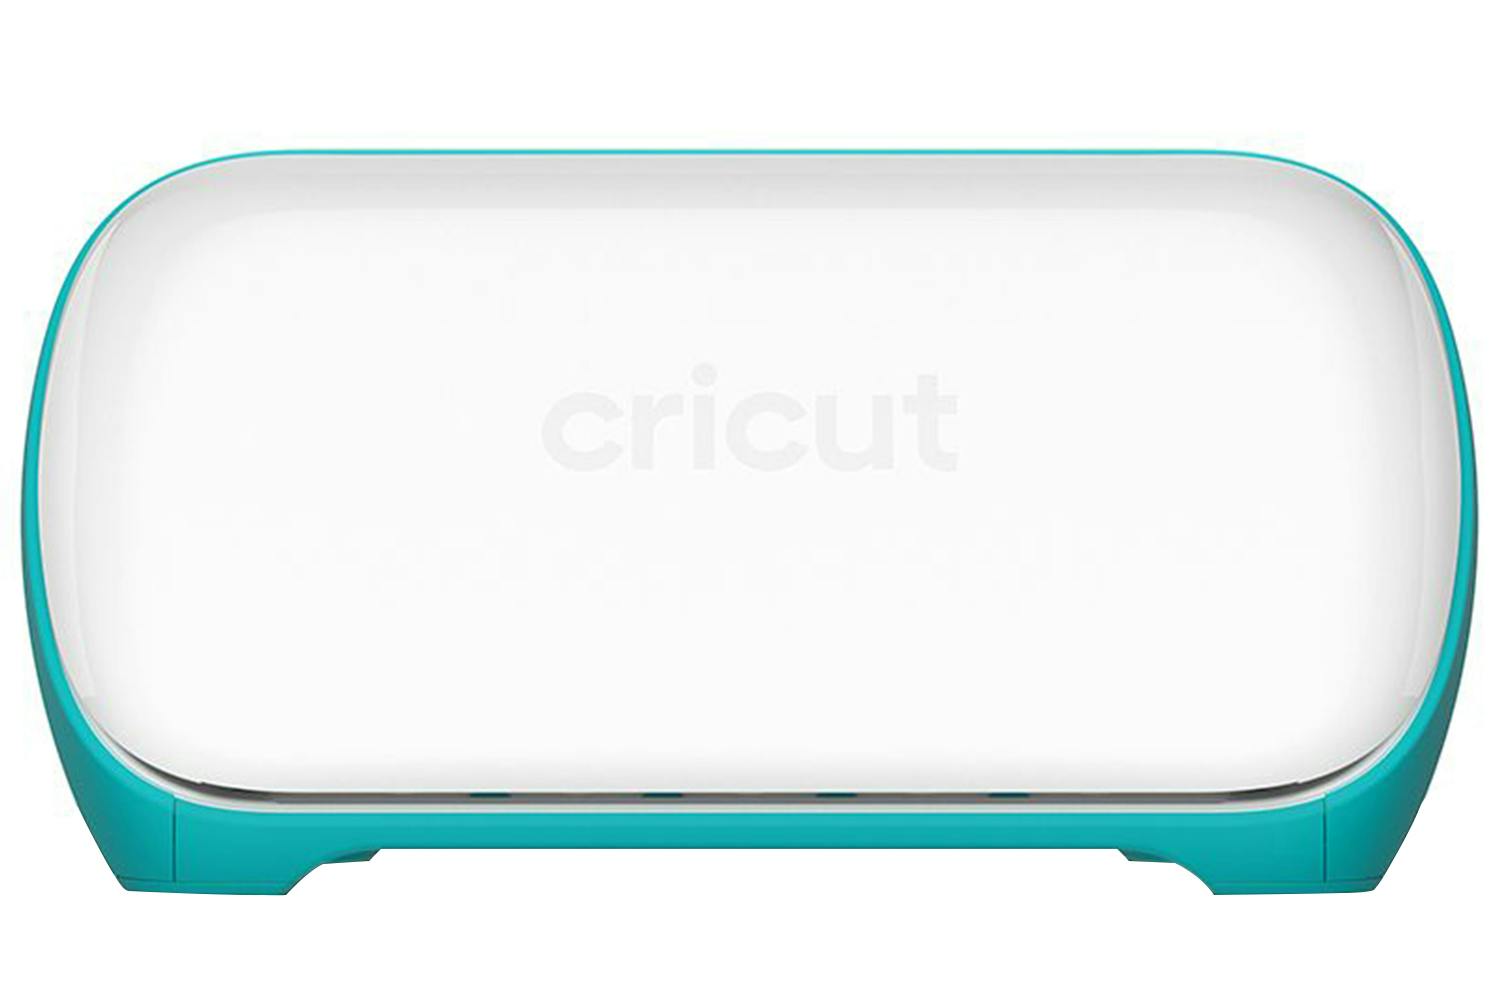 Cricut Joy Smart Cutting Machine